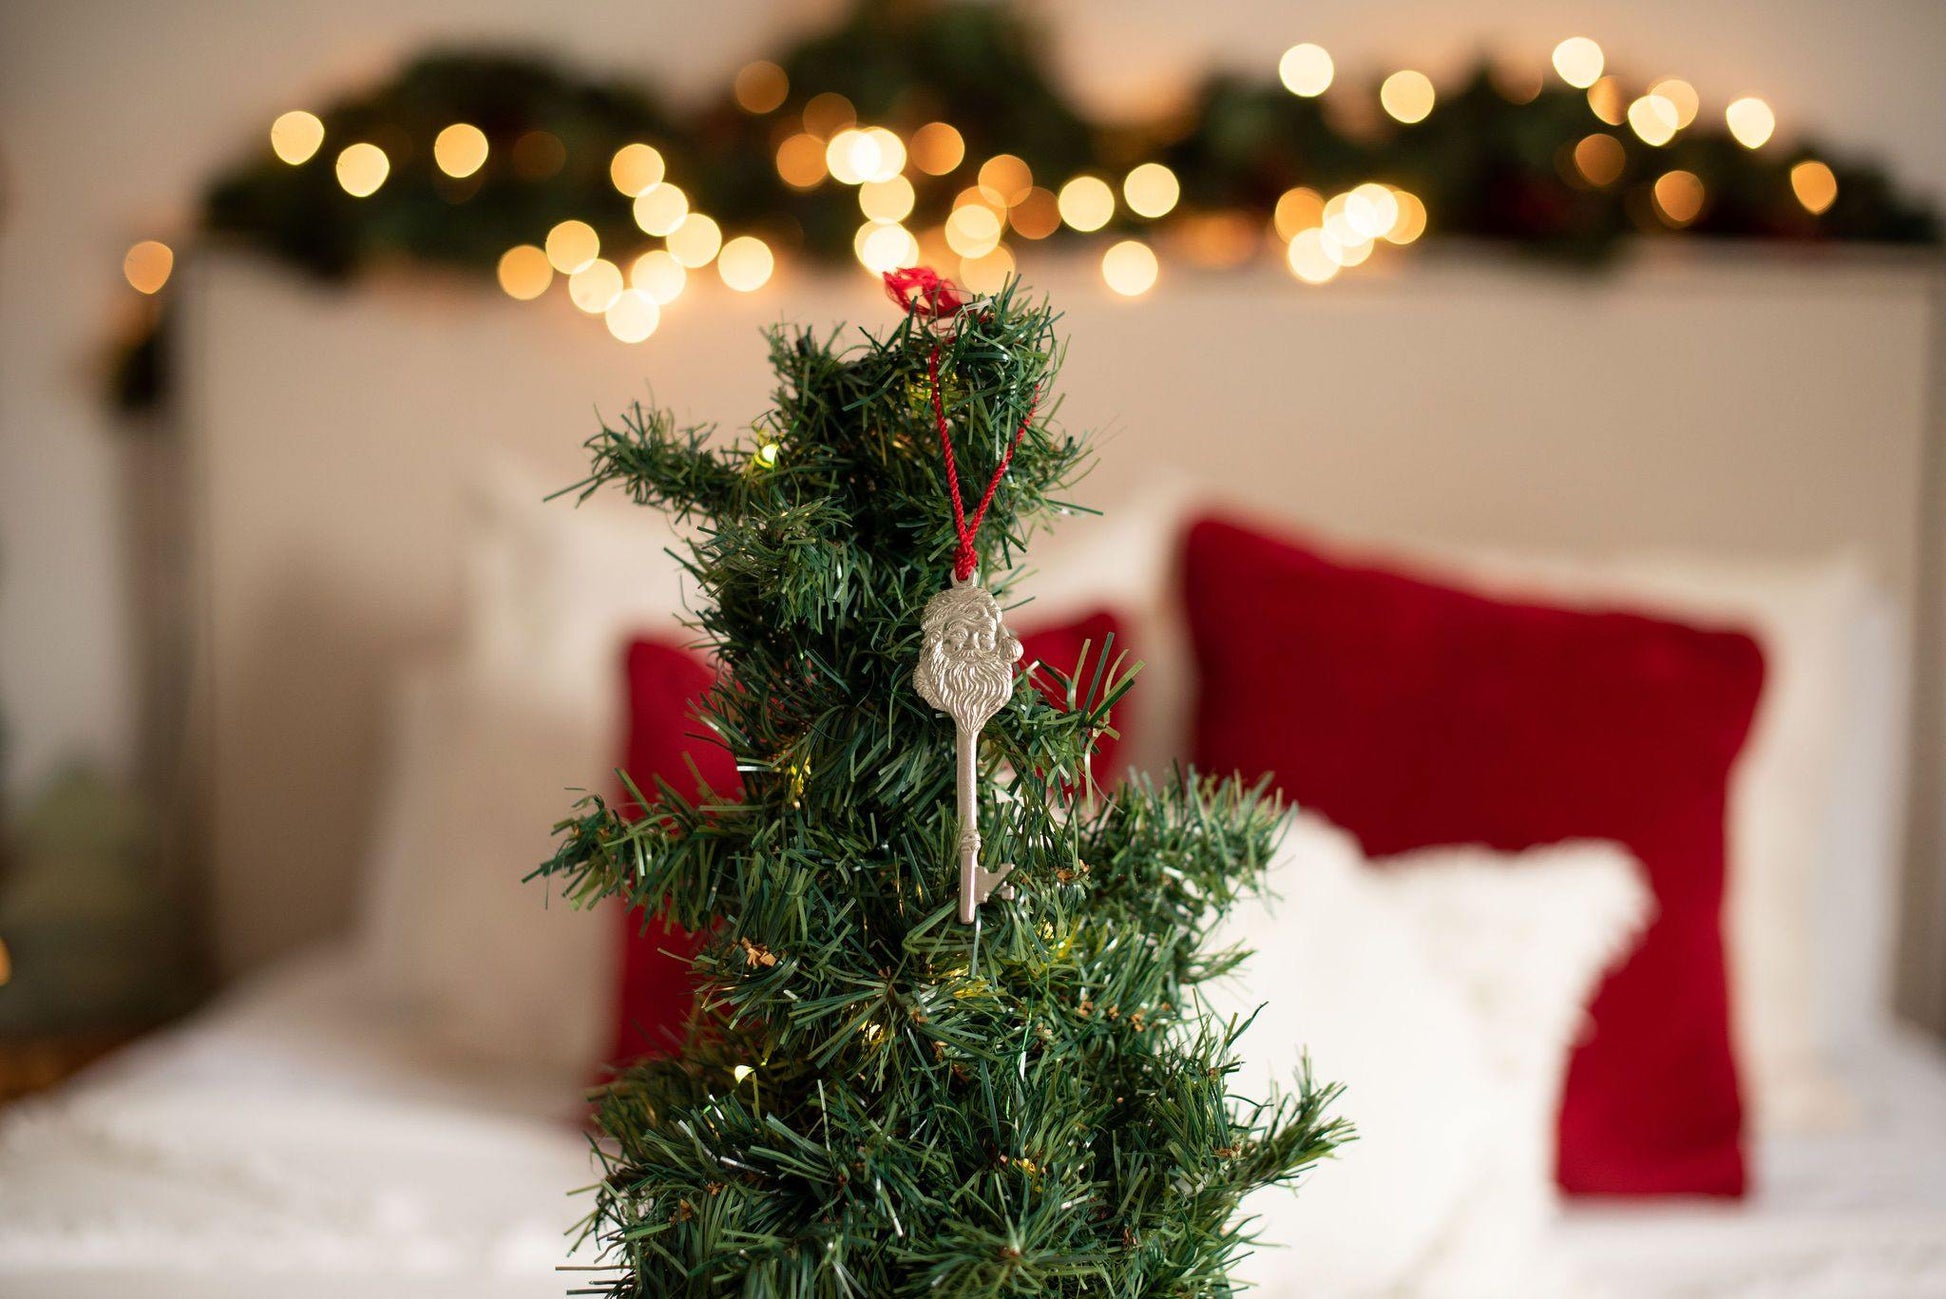 Personalised Magical Santa Key Christmas Decoration Tradition